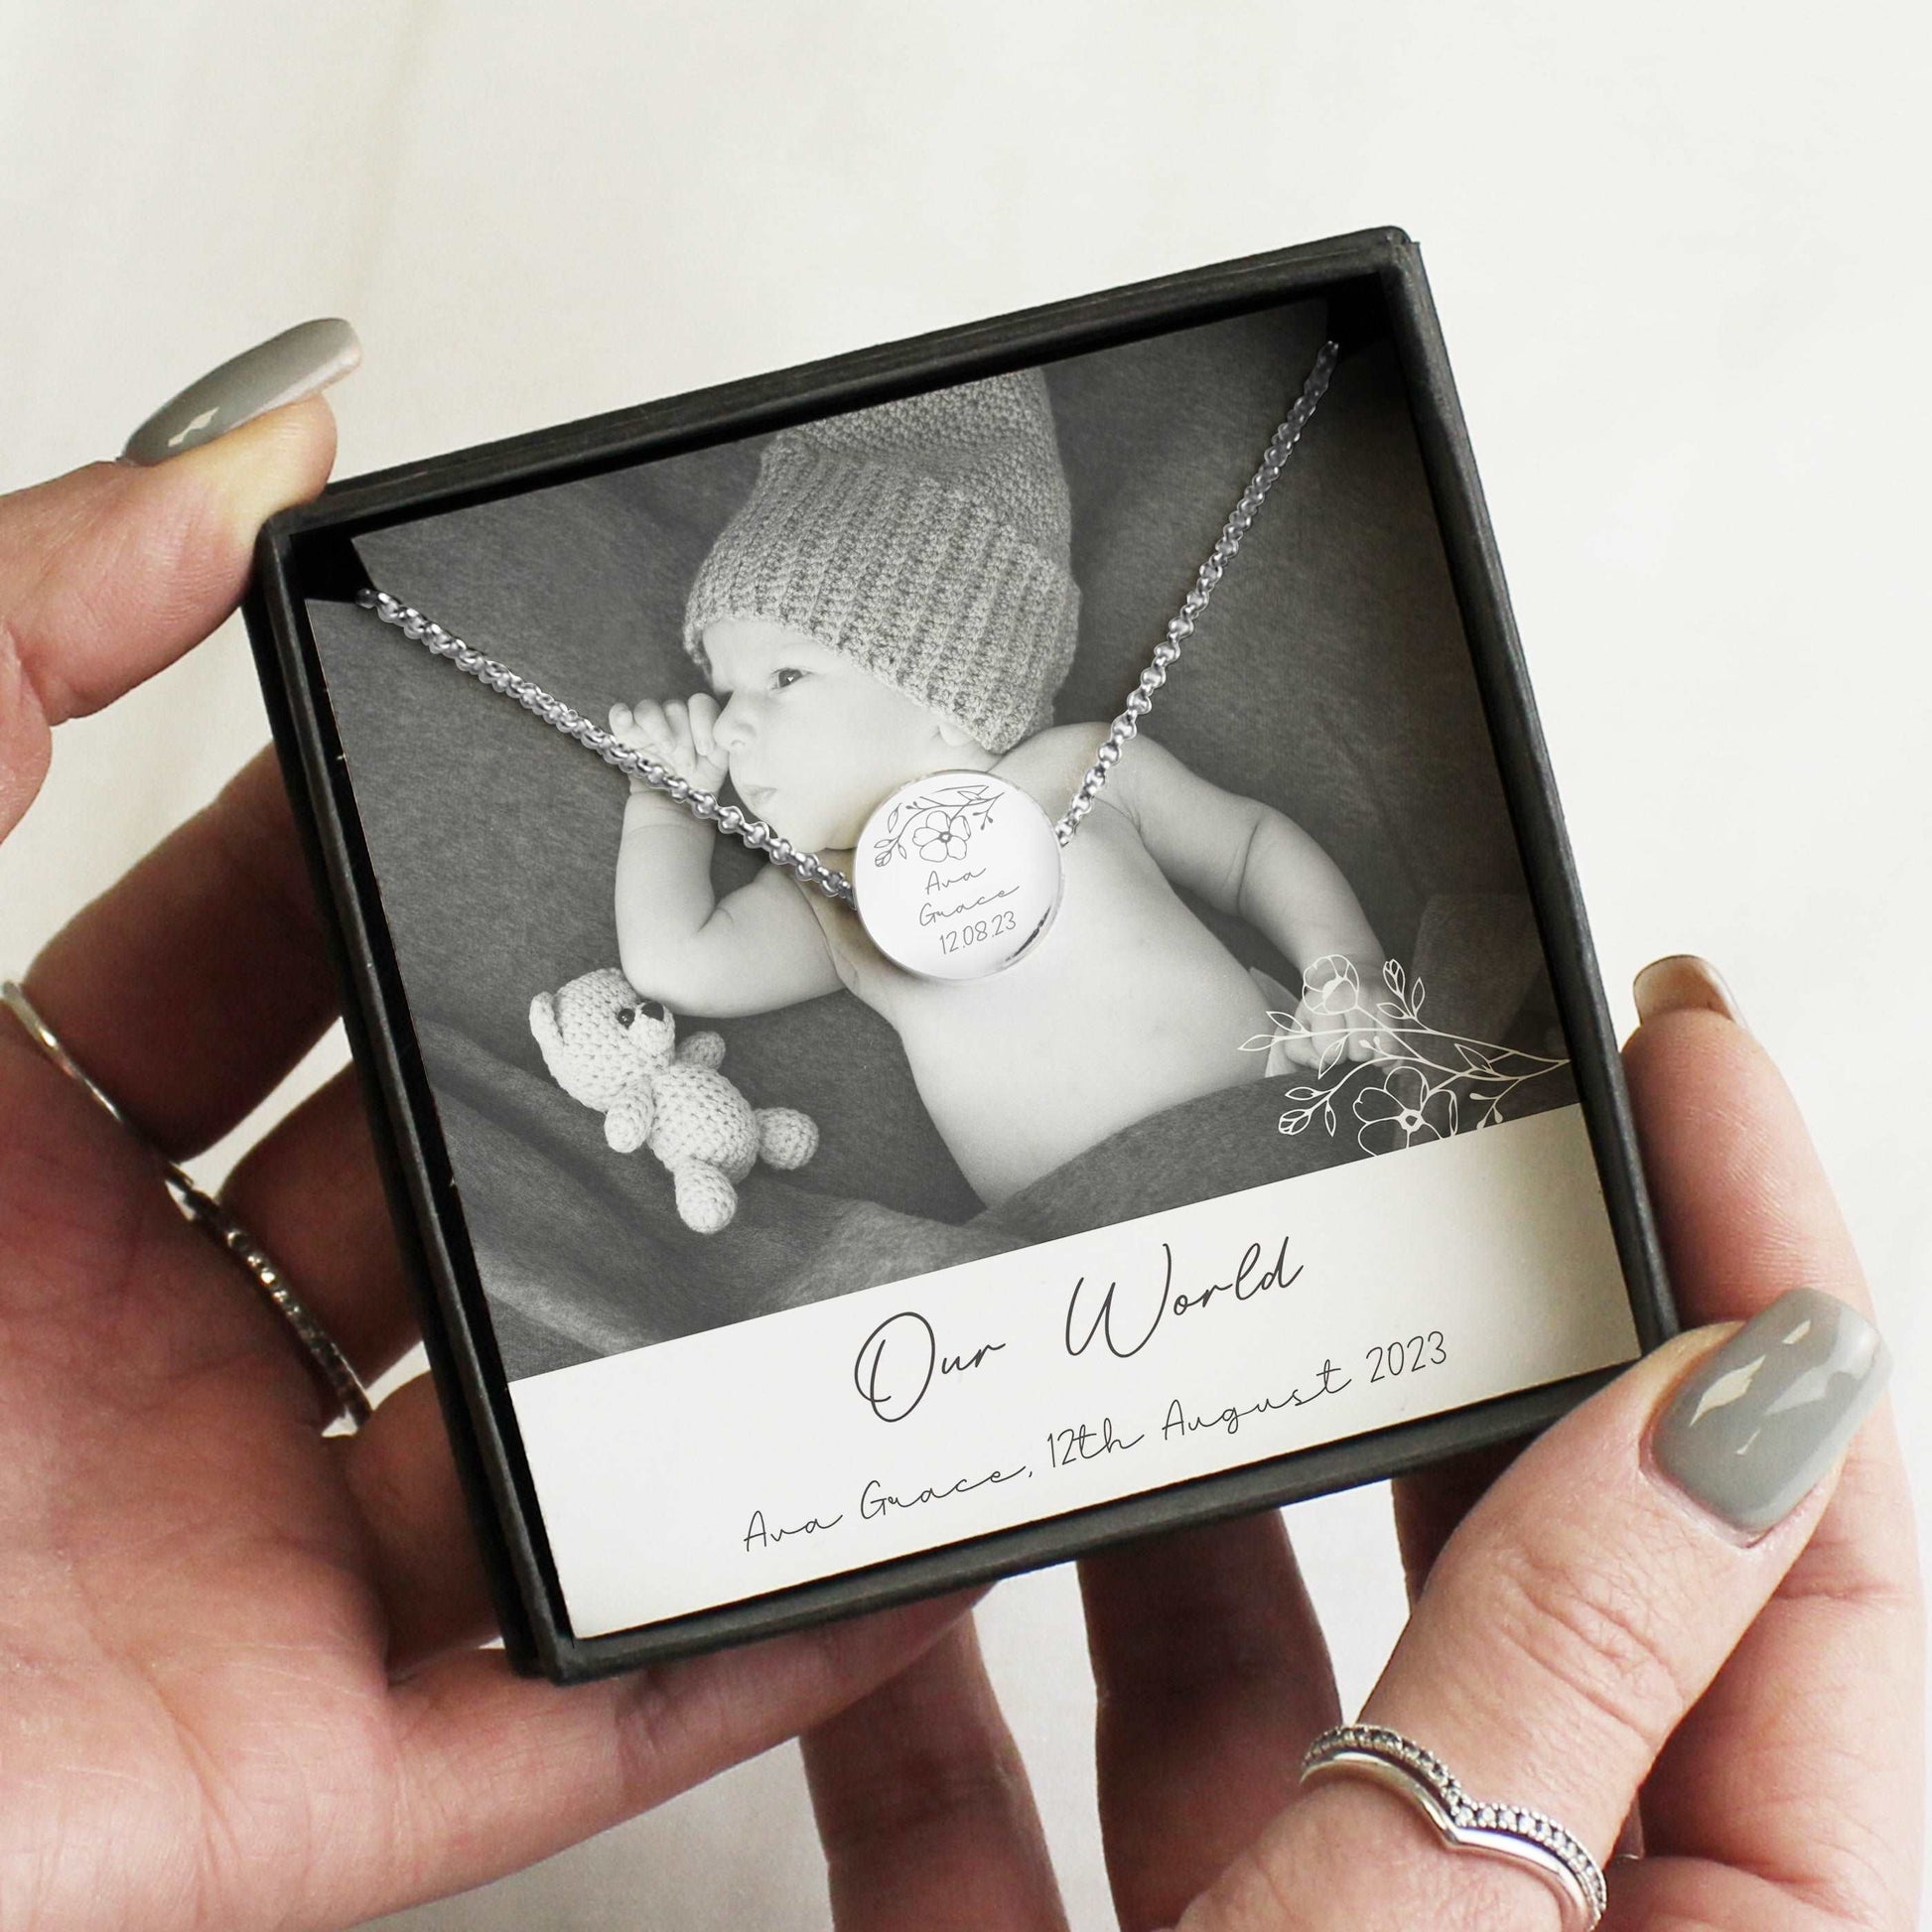 Engraved necklace and photo upload gift box set